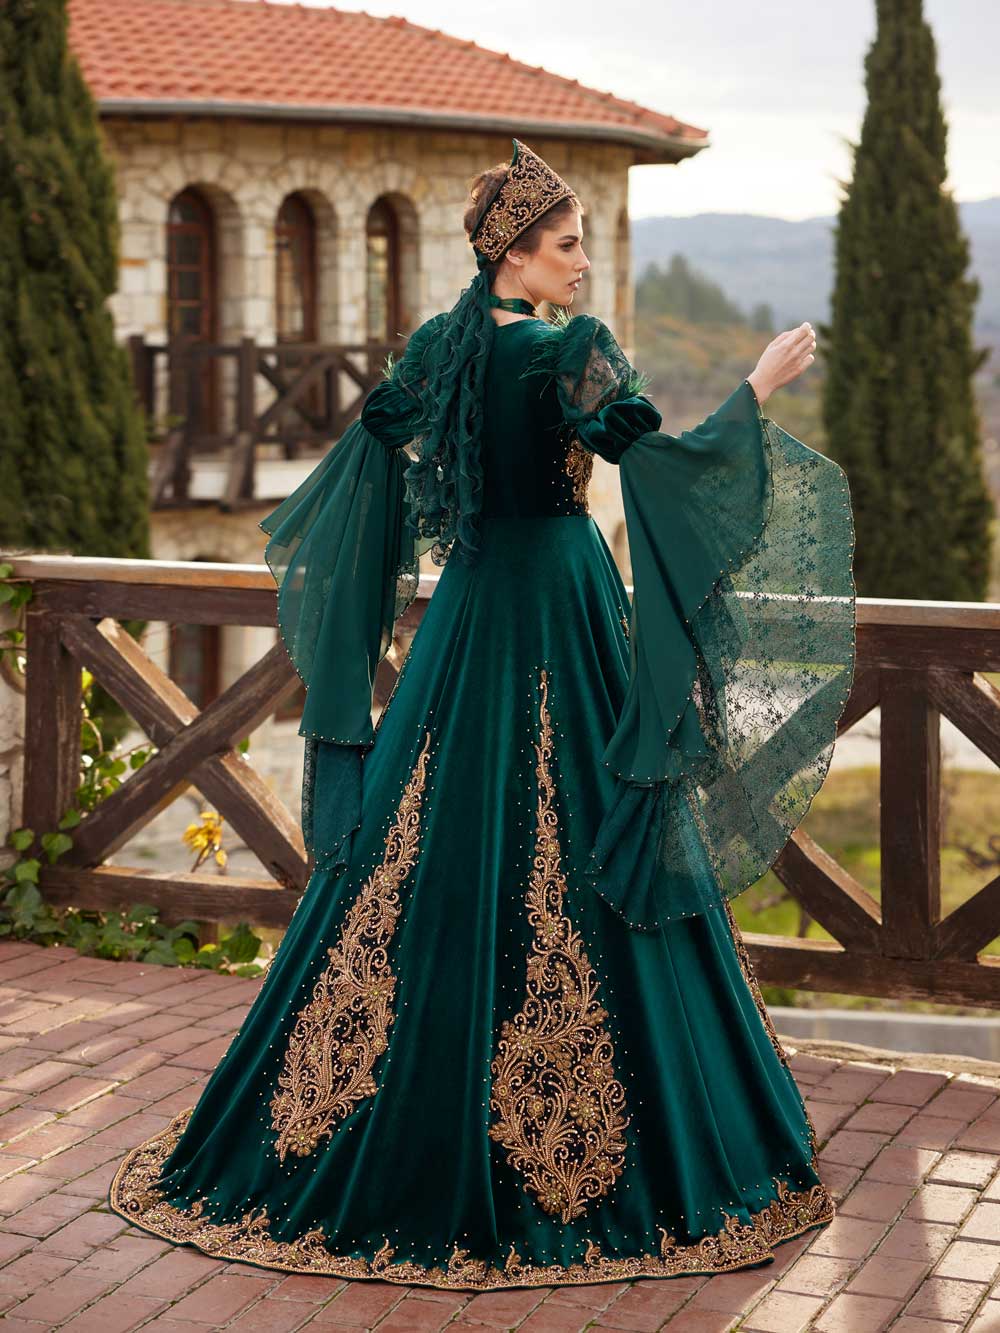 Halter Emerald Green Sequins Ball Gown Prom Dress